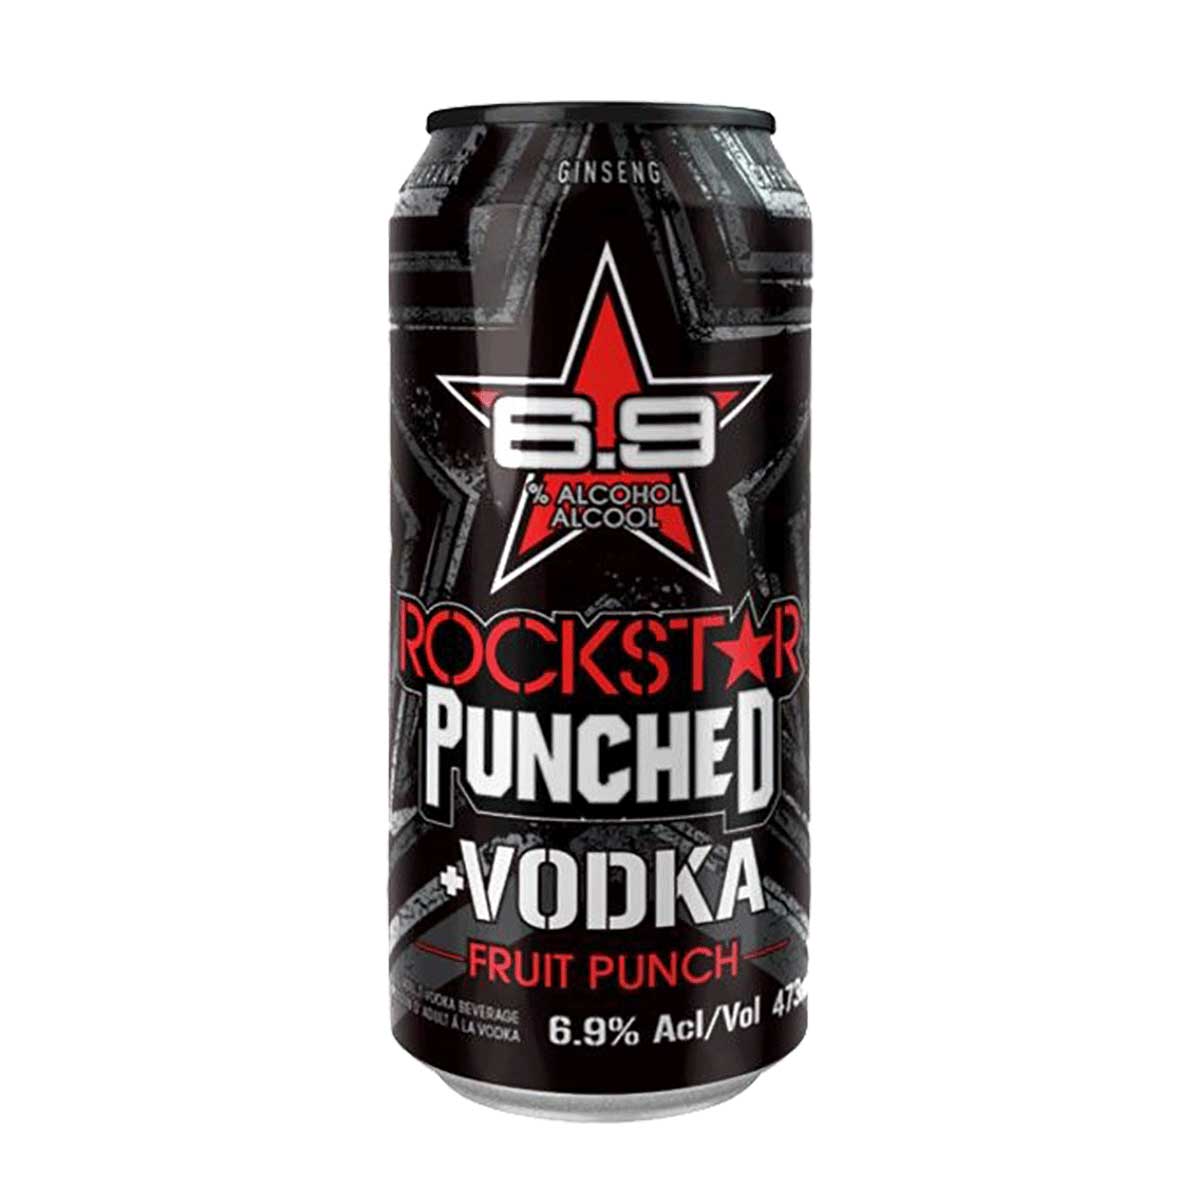 Tag Liquor Stores Delivery BC - Rockstar Vodka Fruit Punch 473ml